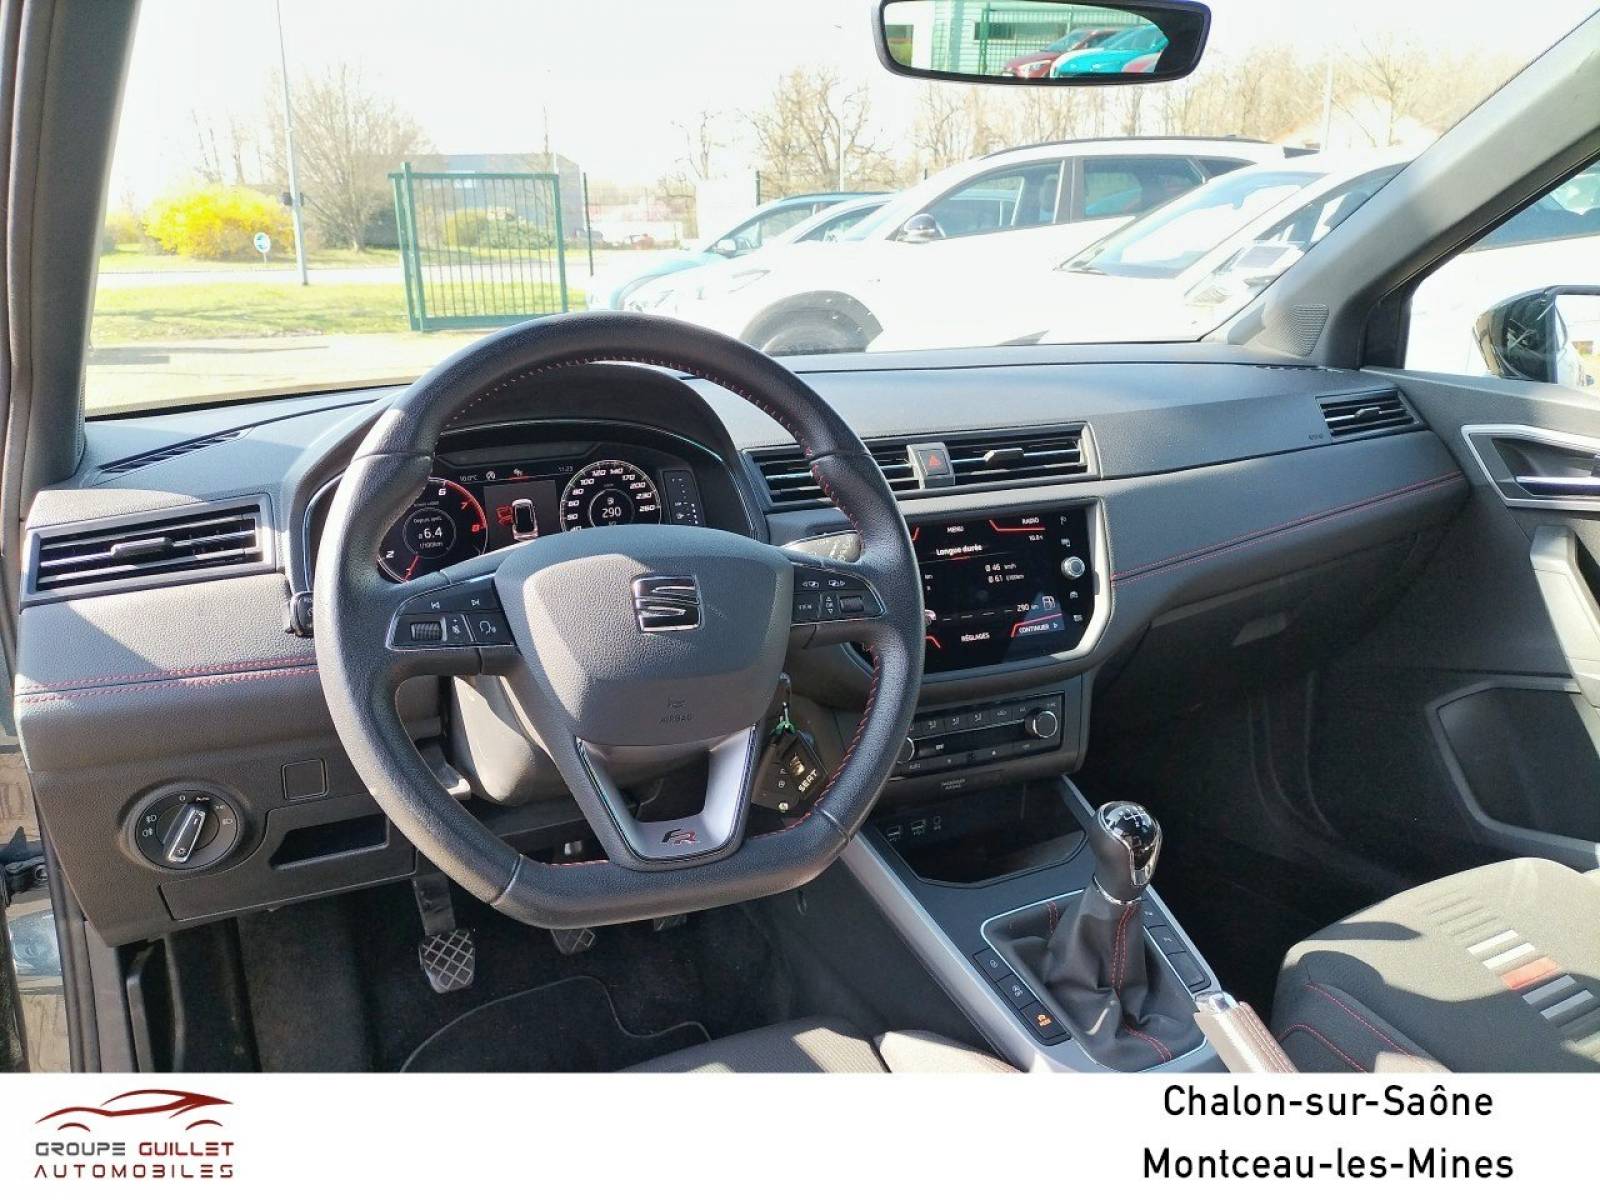 SEAT Arona 1.0 EcoTSI 115 ch Start/Stop BVM6 - véhicule d'occasion - Groupe Guillet - Chalon Automobile Mazda - Hyundai - Isuzu - 71100 - Chalon-sur-Saône - 16